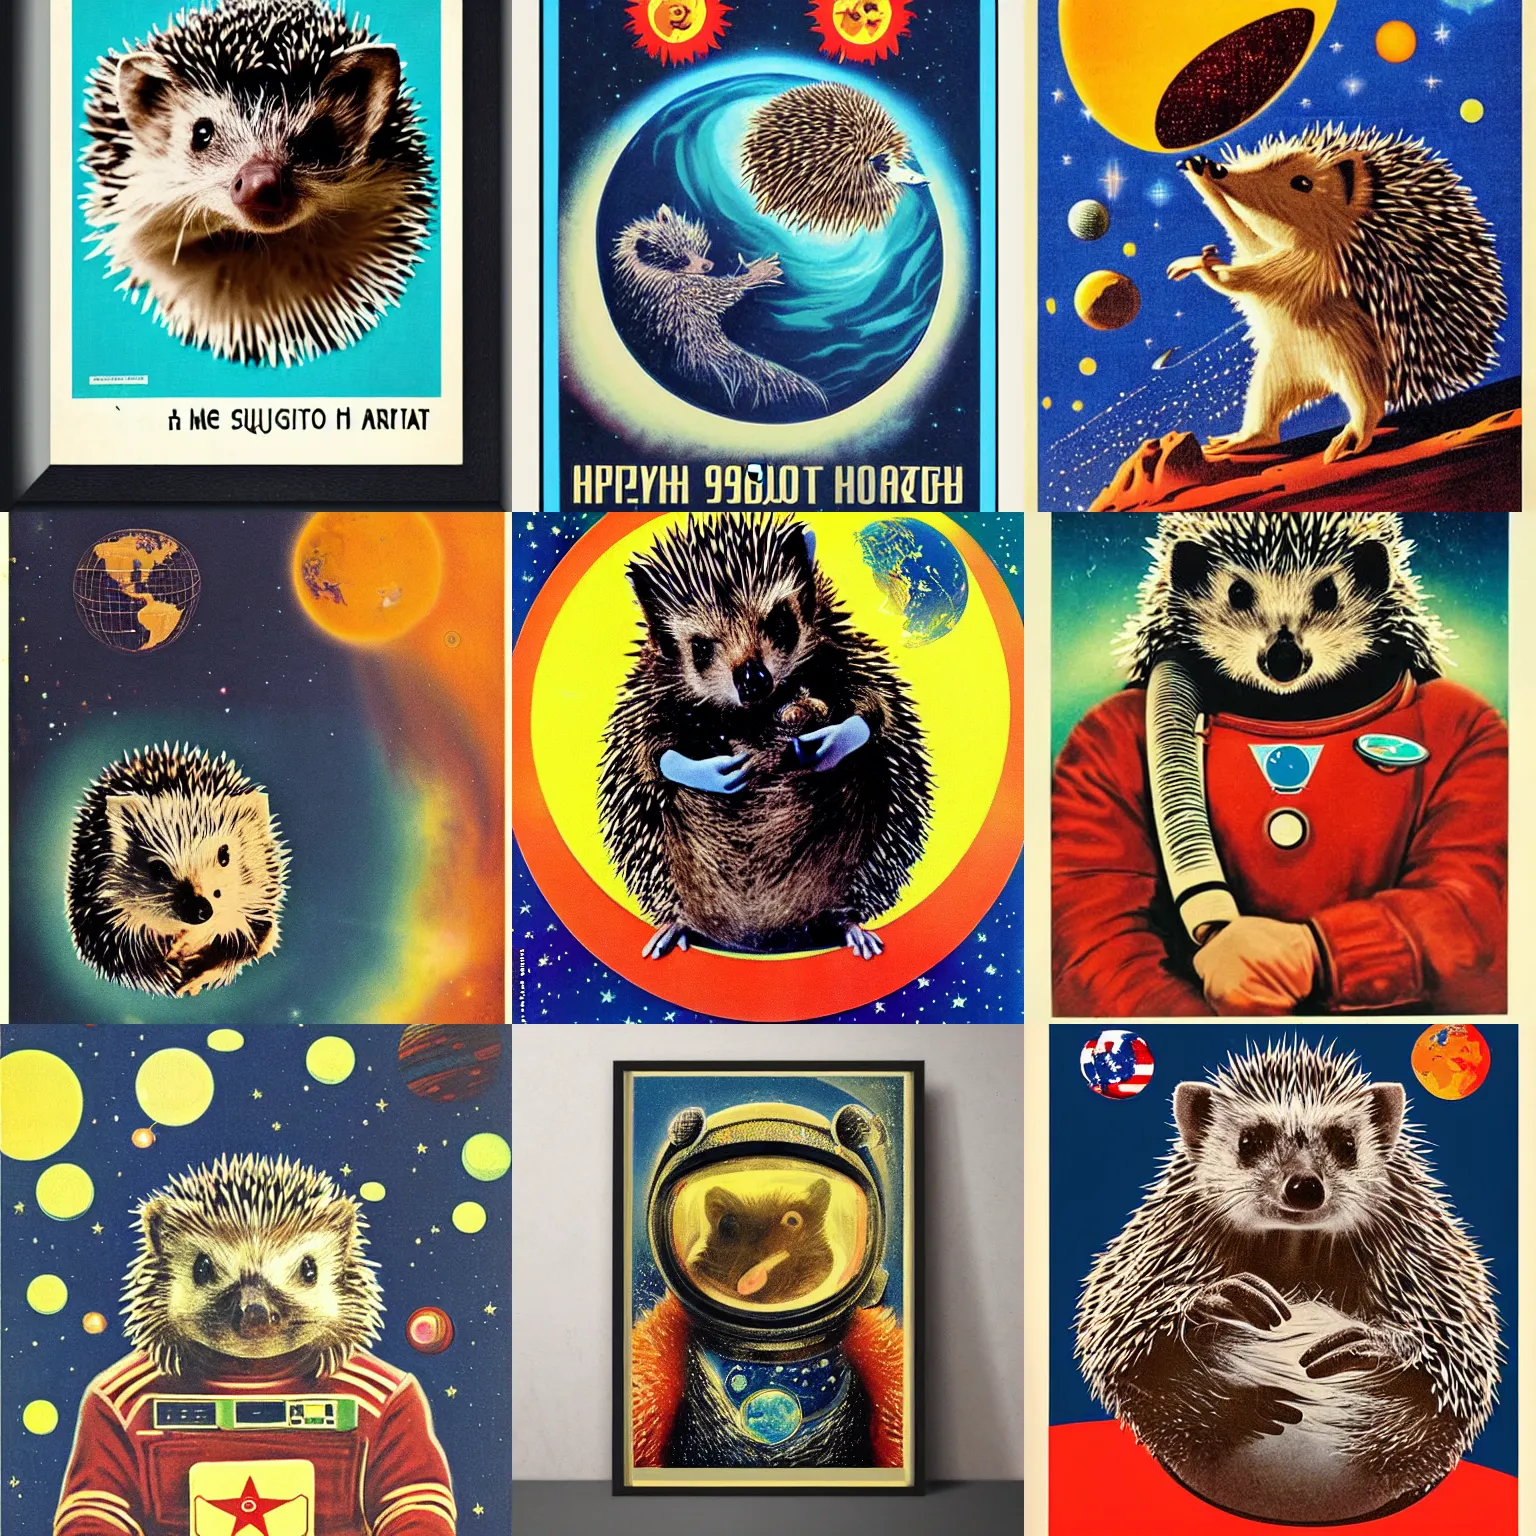 Prompt: Hedgehog cosmonaut portrait, planet earth, 60s poster, 1972 Soviet